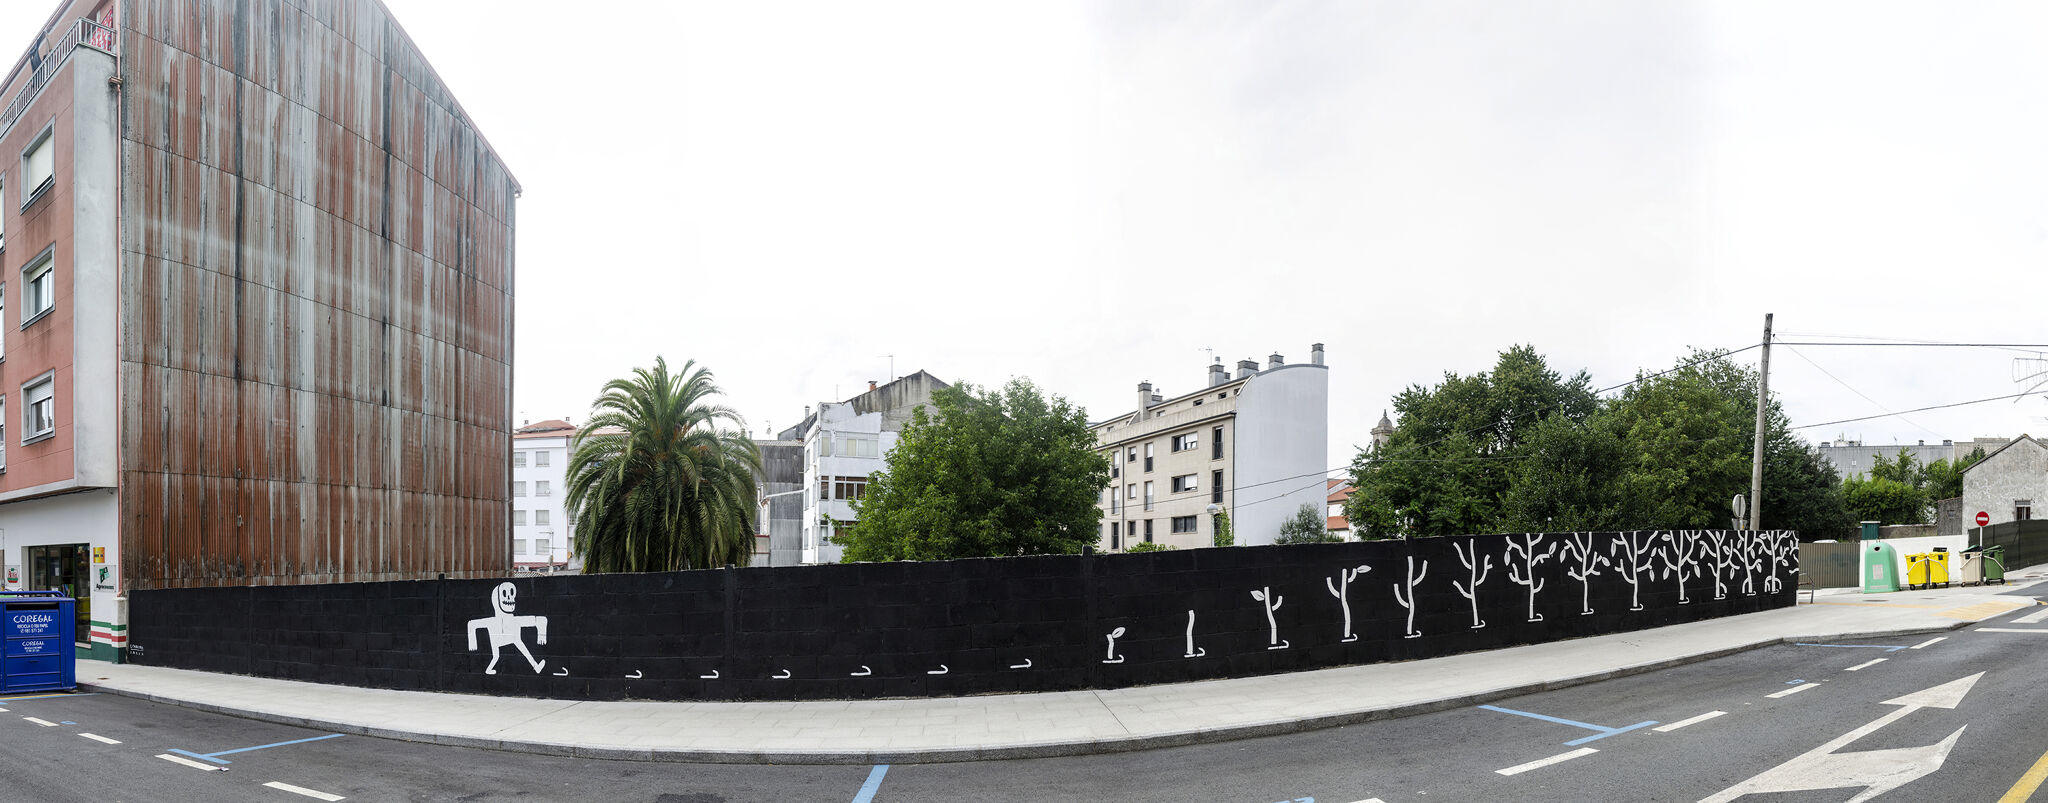 Leandro Barea&mdash;Wall by LEANDRO BAREA for DESORDES CREATIVAS 2019 in Ordes (Galicia-Spain)